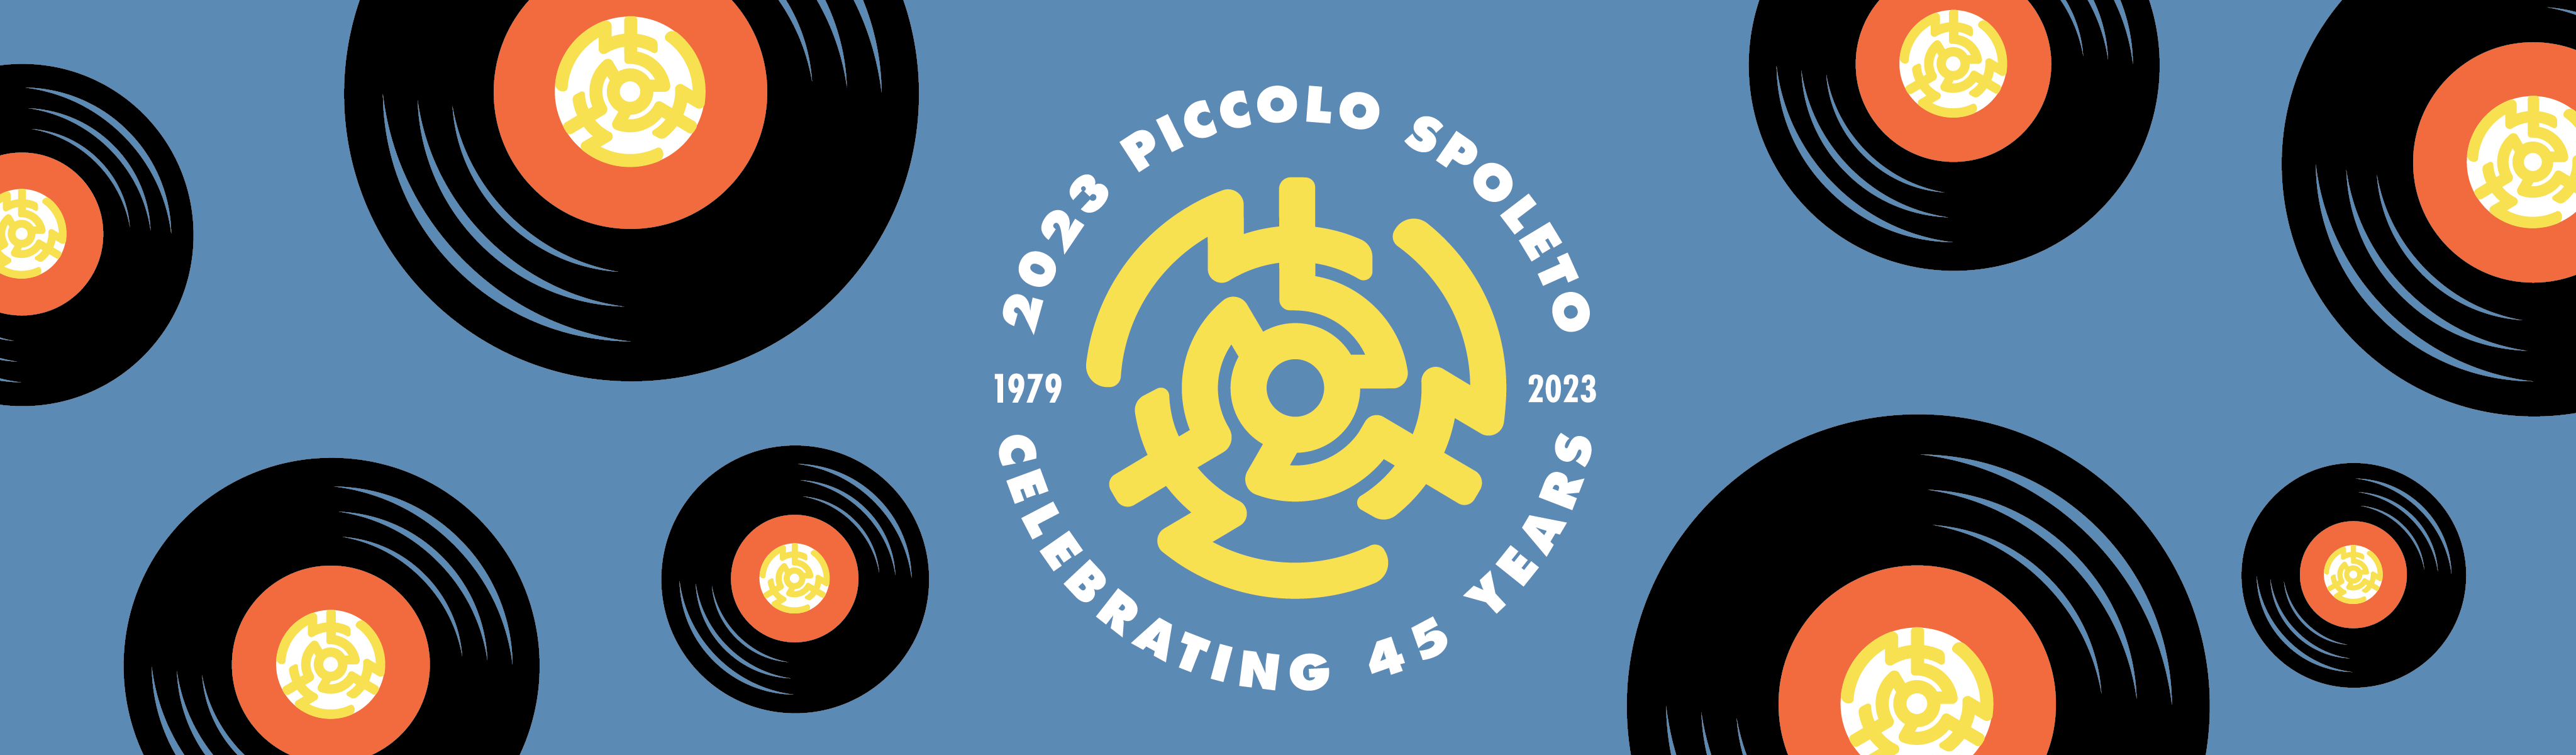 Piccolo Spoleto Festival Logo